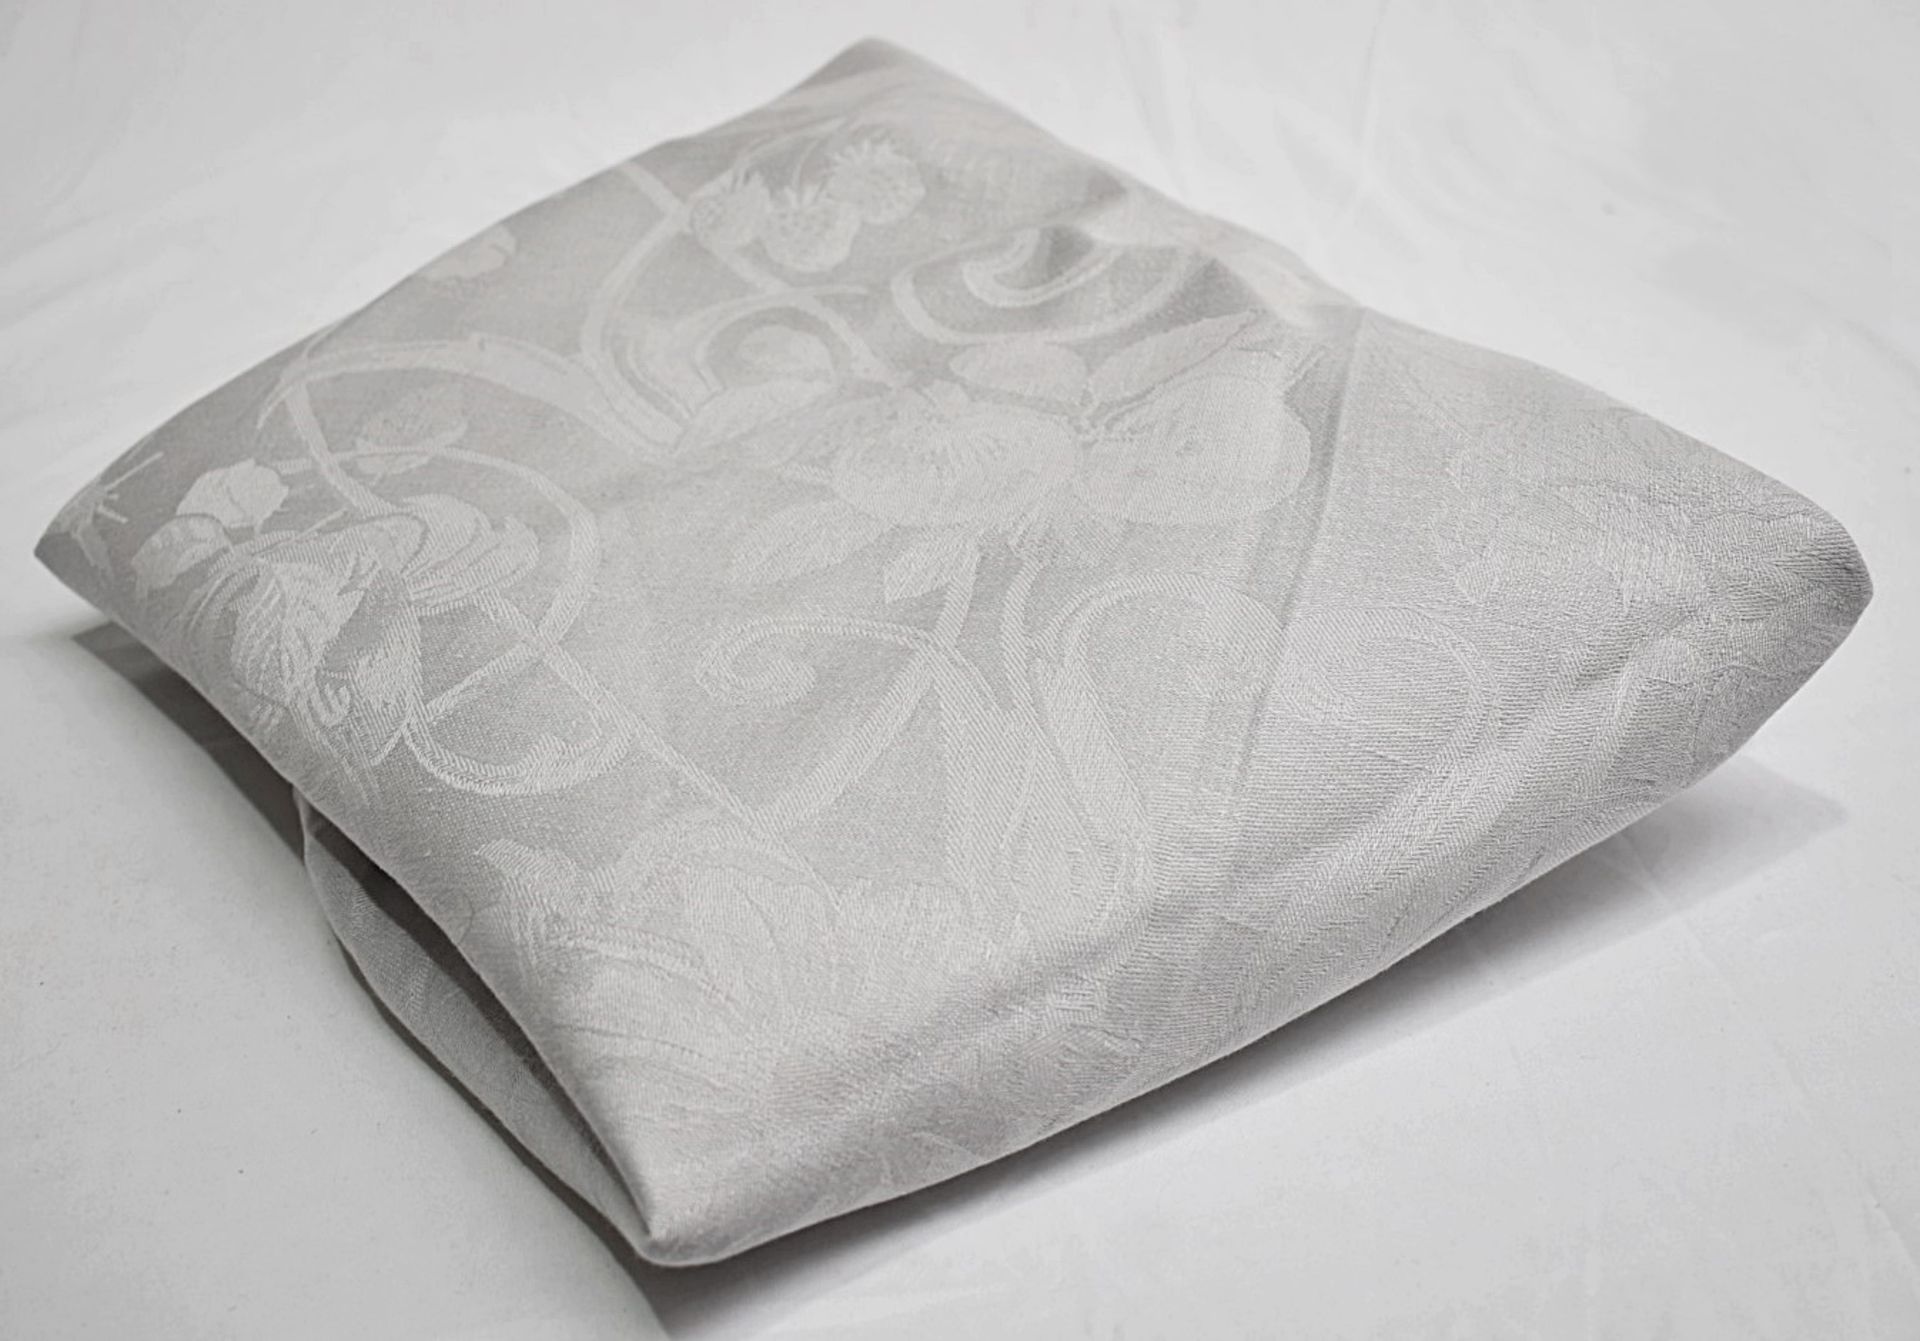 1 x LE JACQUARD FRANÇAIS 'Tivoli' Luxury Linen Tablecloth Ø240cm - Original Price £385.00 - Image 6 of 8